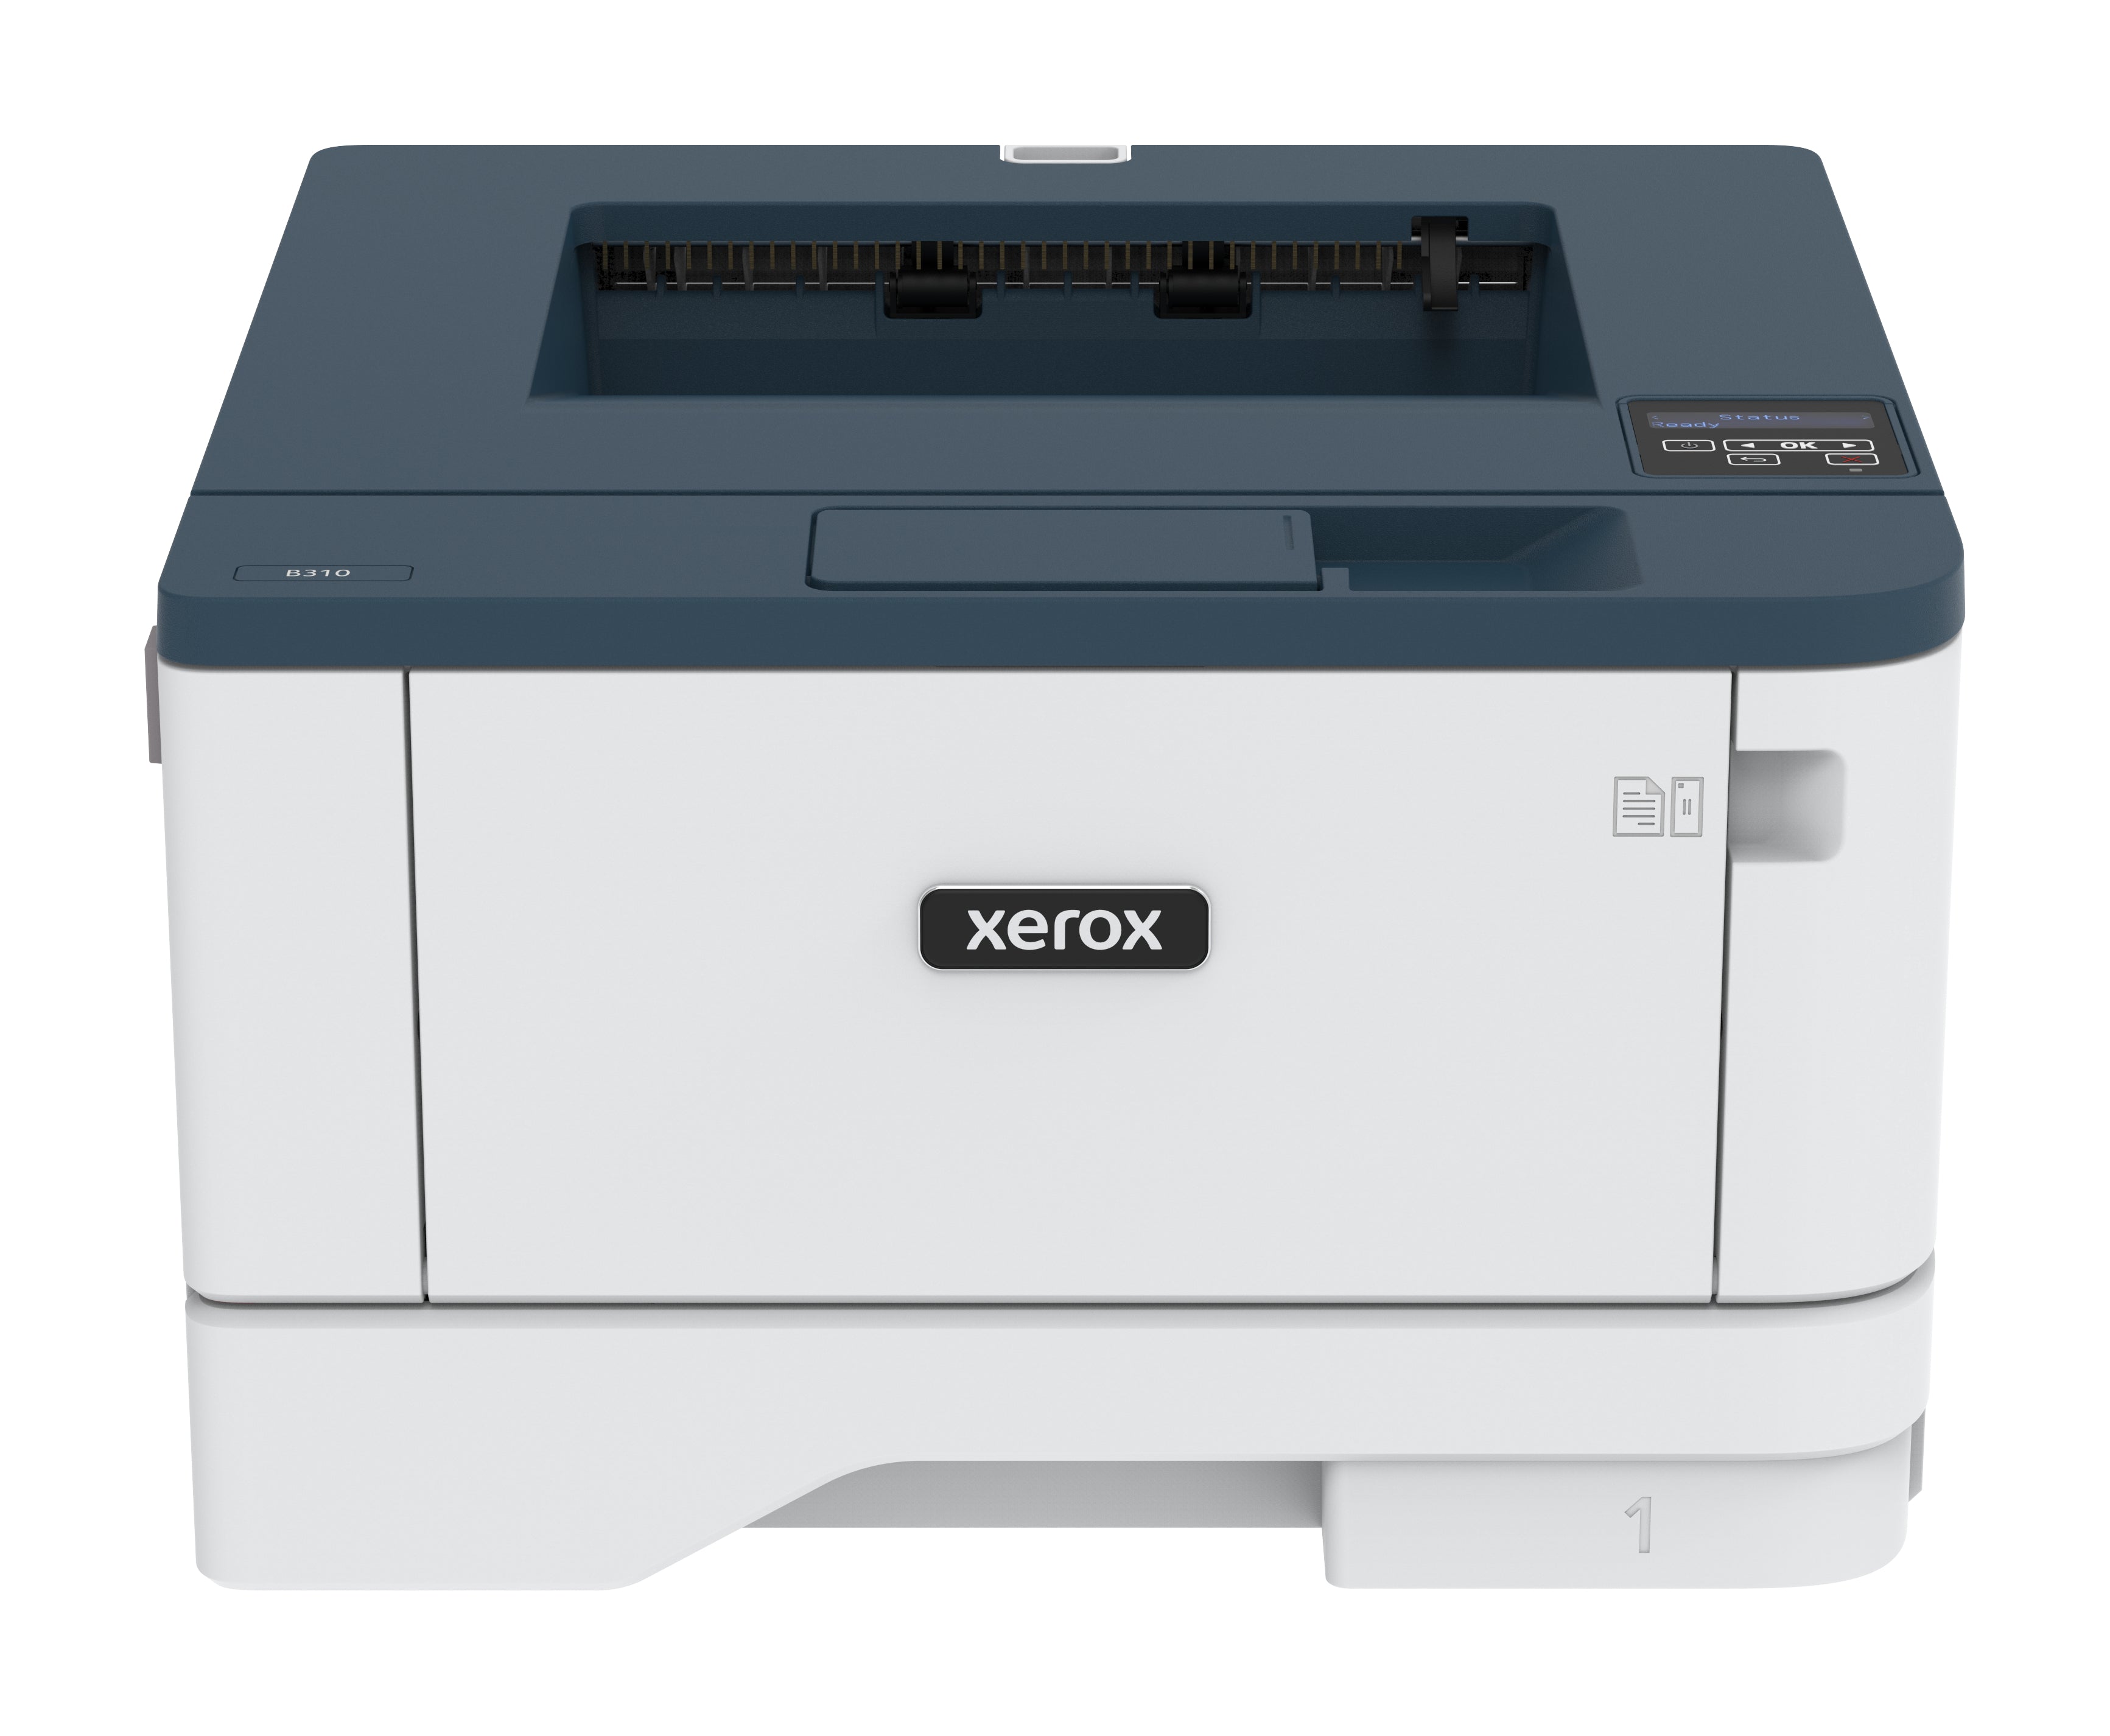 Impresora Xerox B310V, B/N, USB, WiFi, LAN